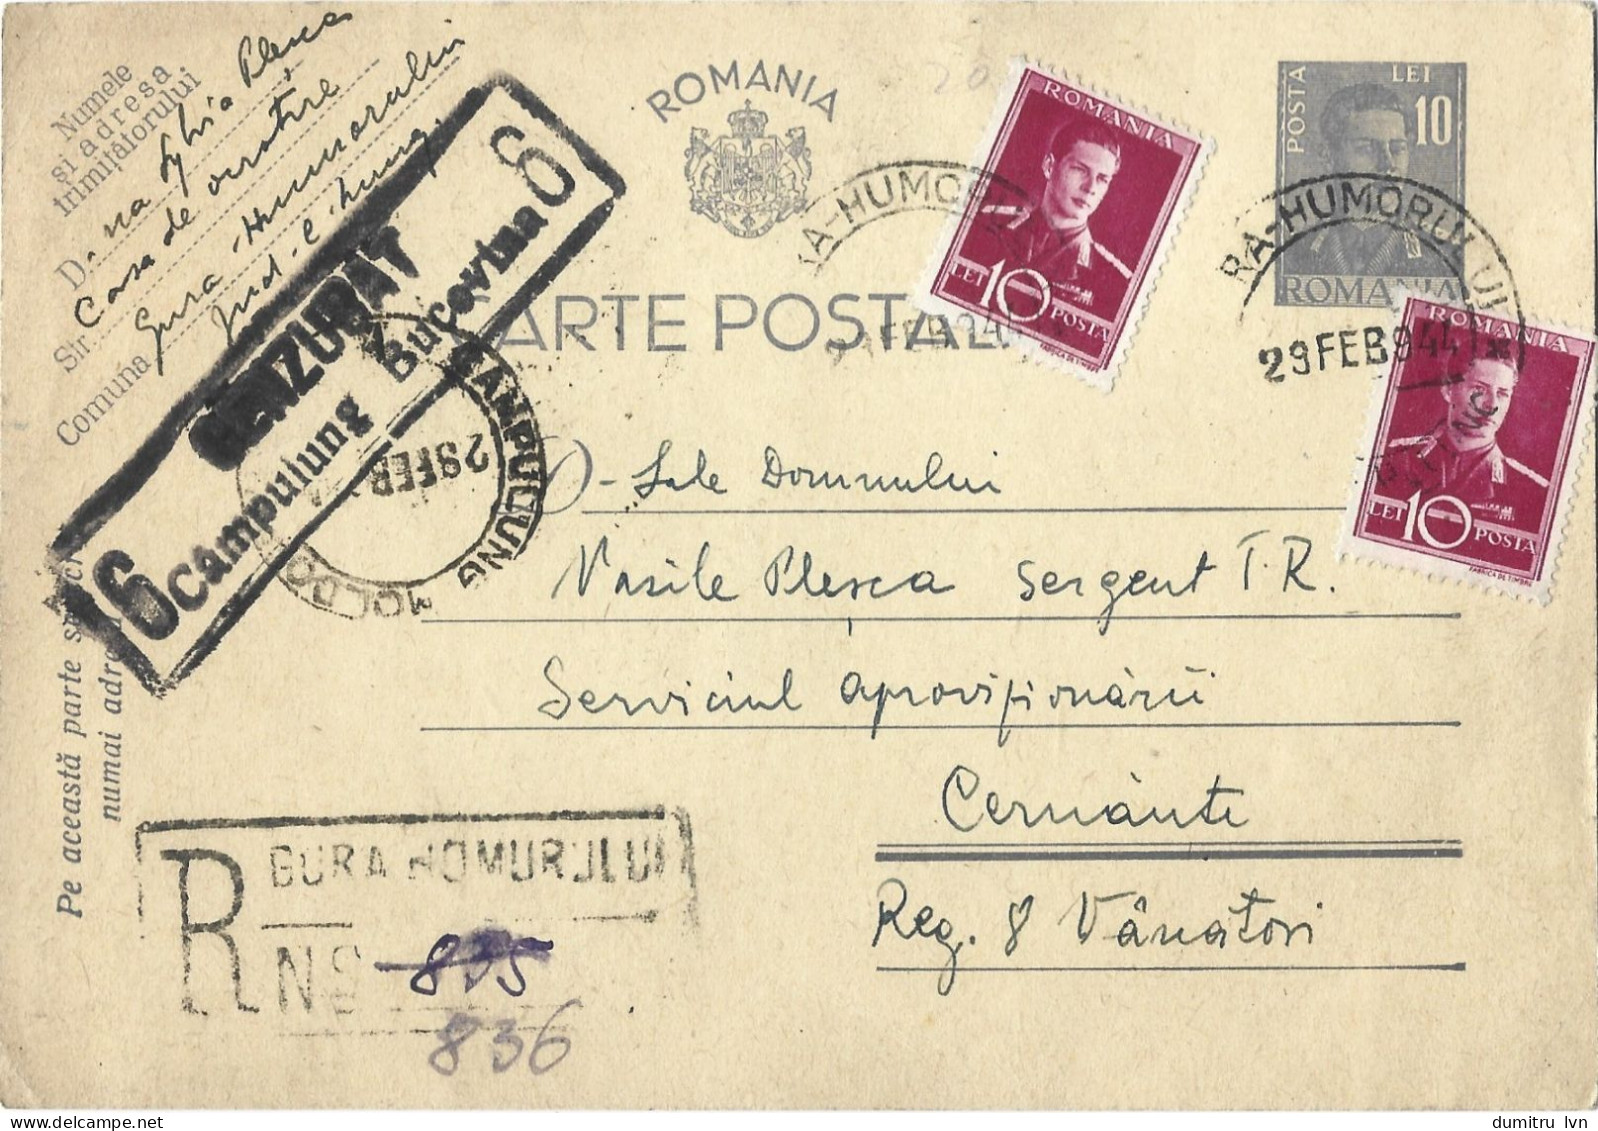 ROMANIA 1944 POSTCARD, CENSORED CAMPULUNG-BUCOVINA 6, POSTCARD STATIONERY - World War 2 Letters